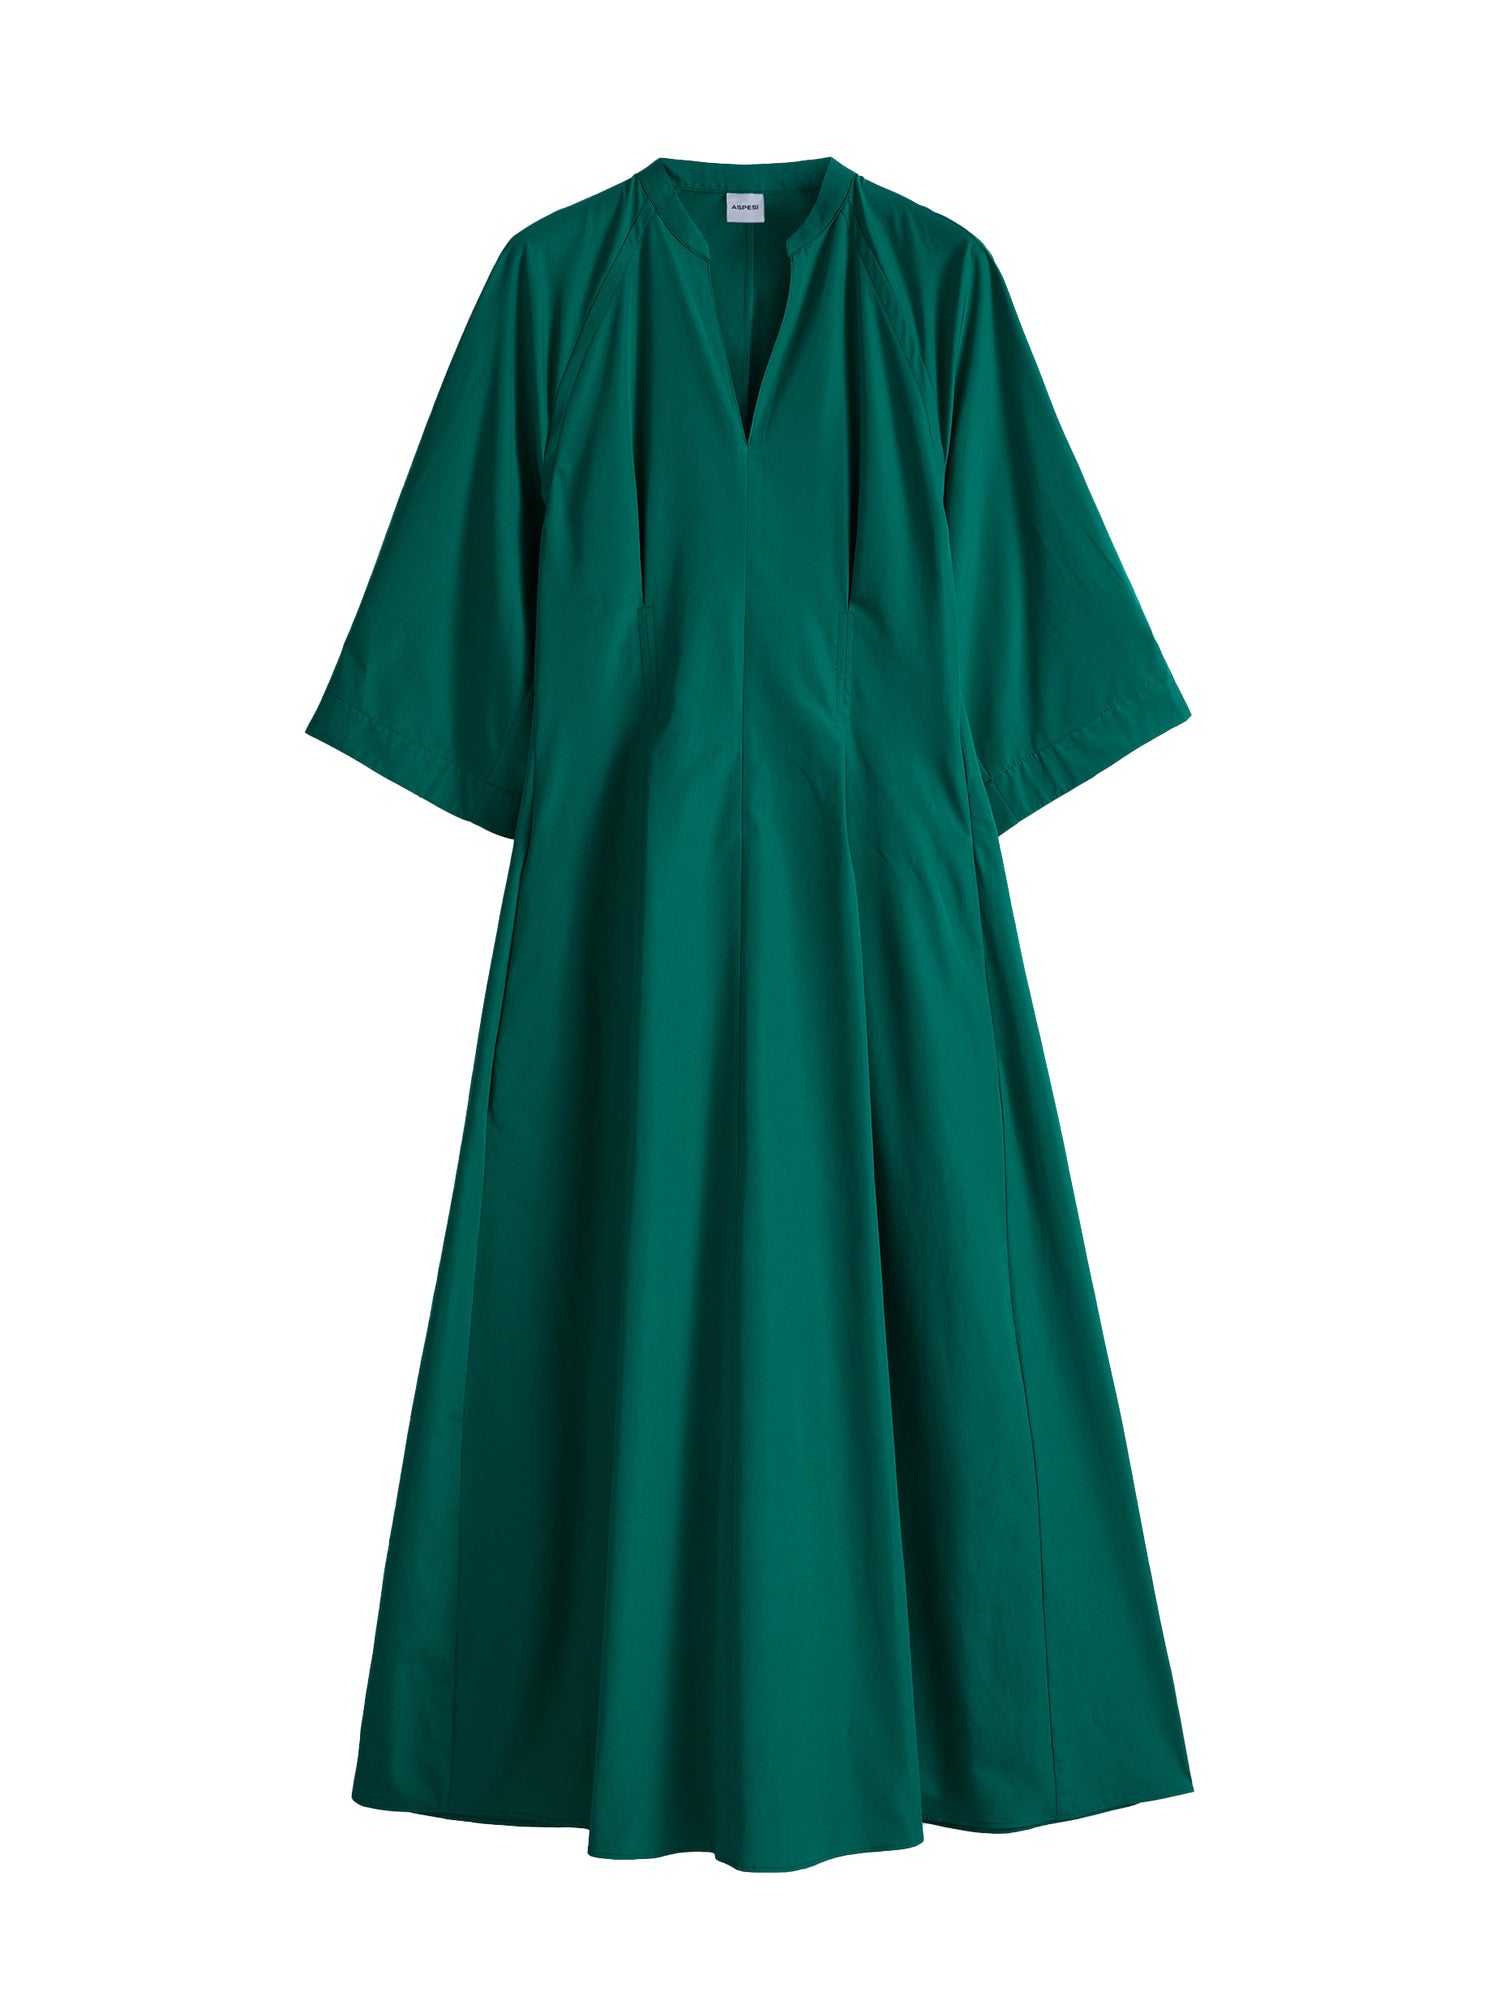 Cotton poplin dress, green